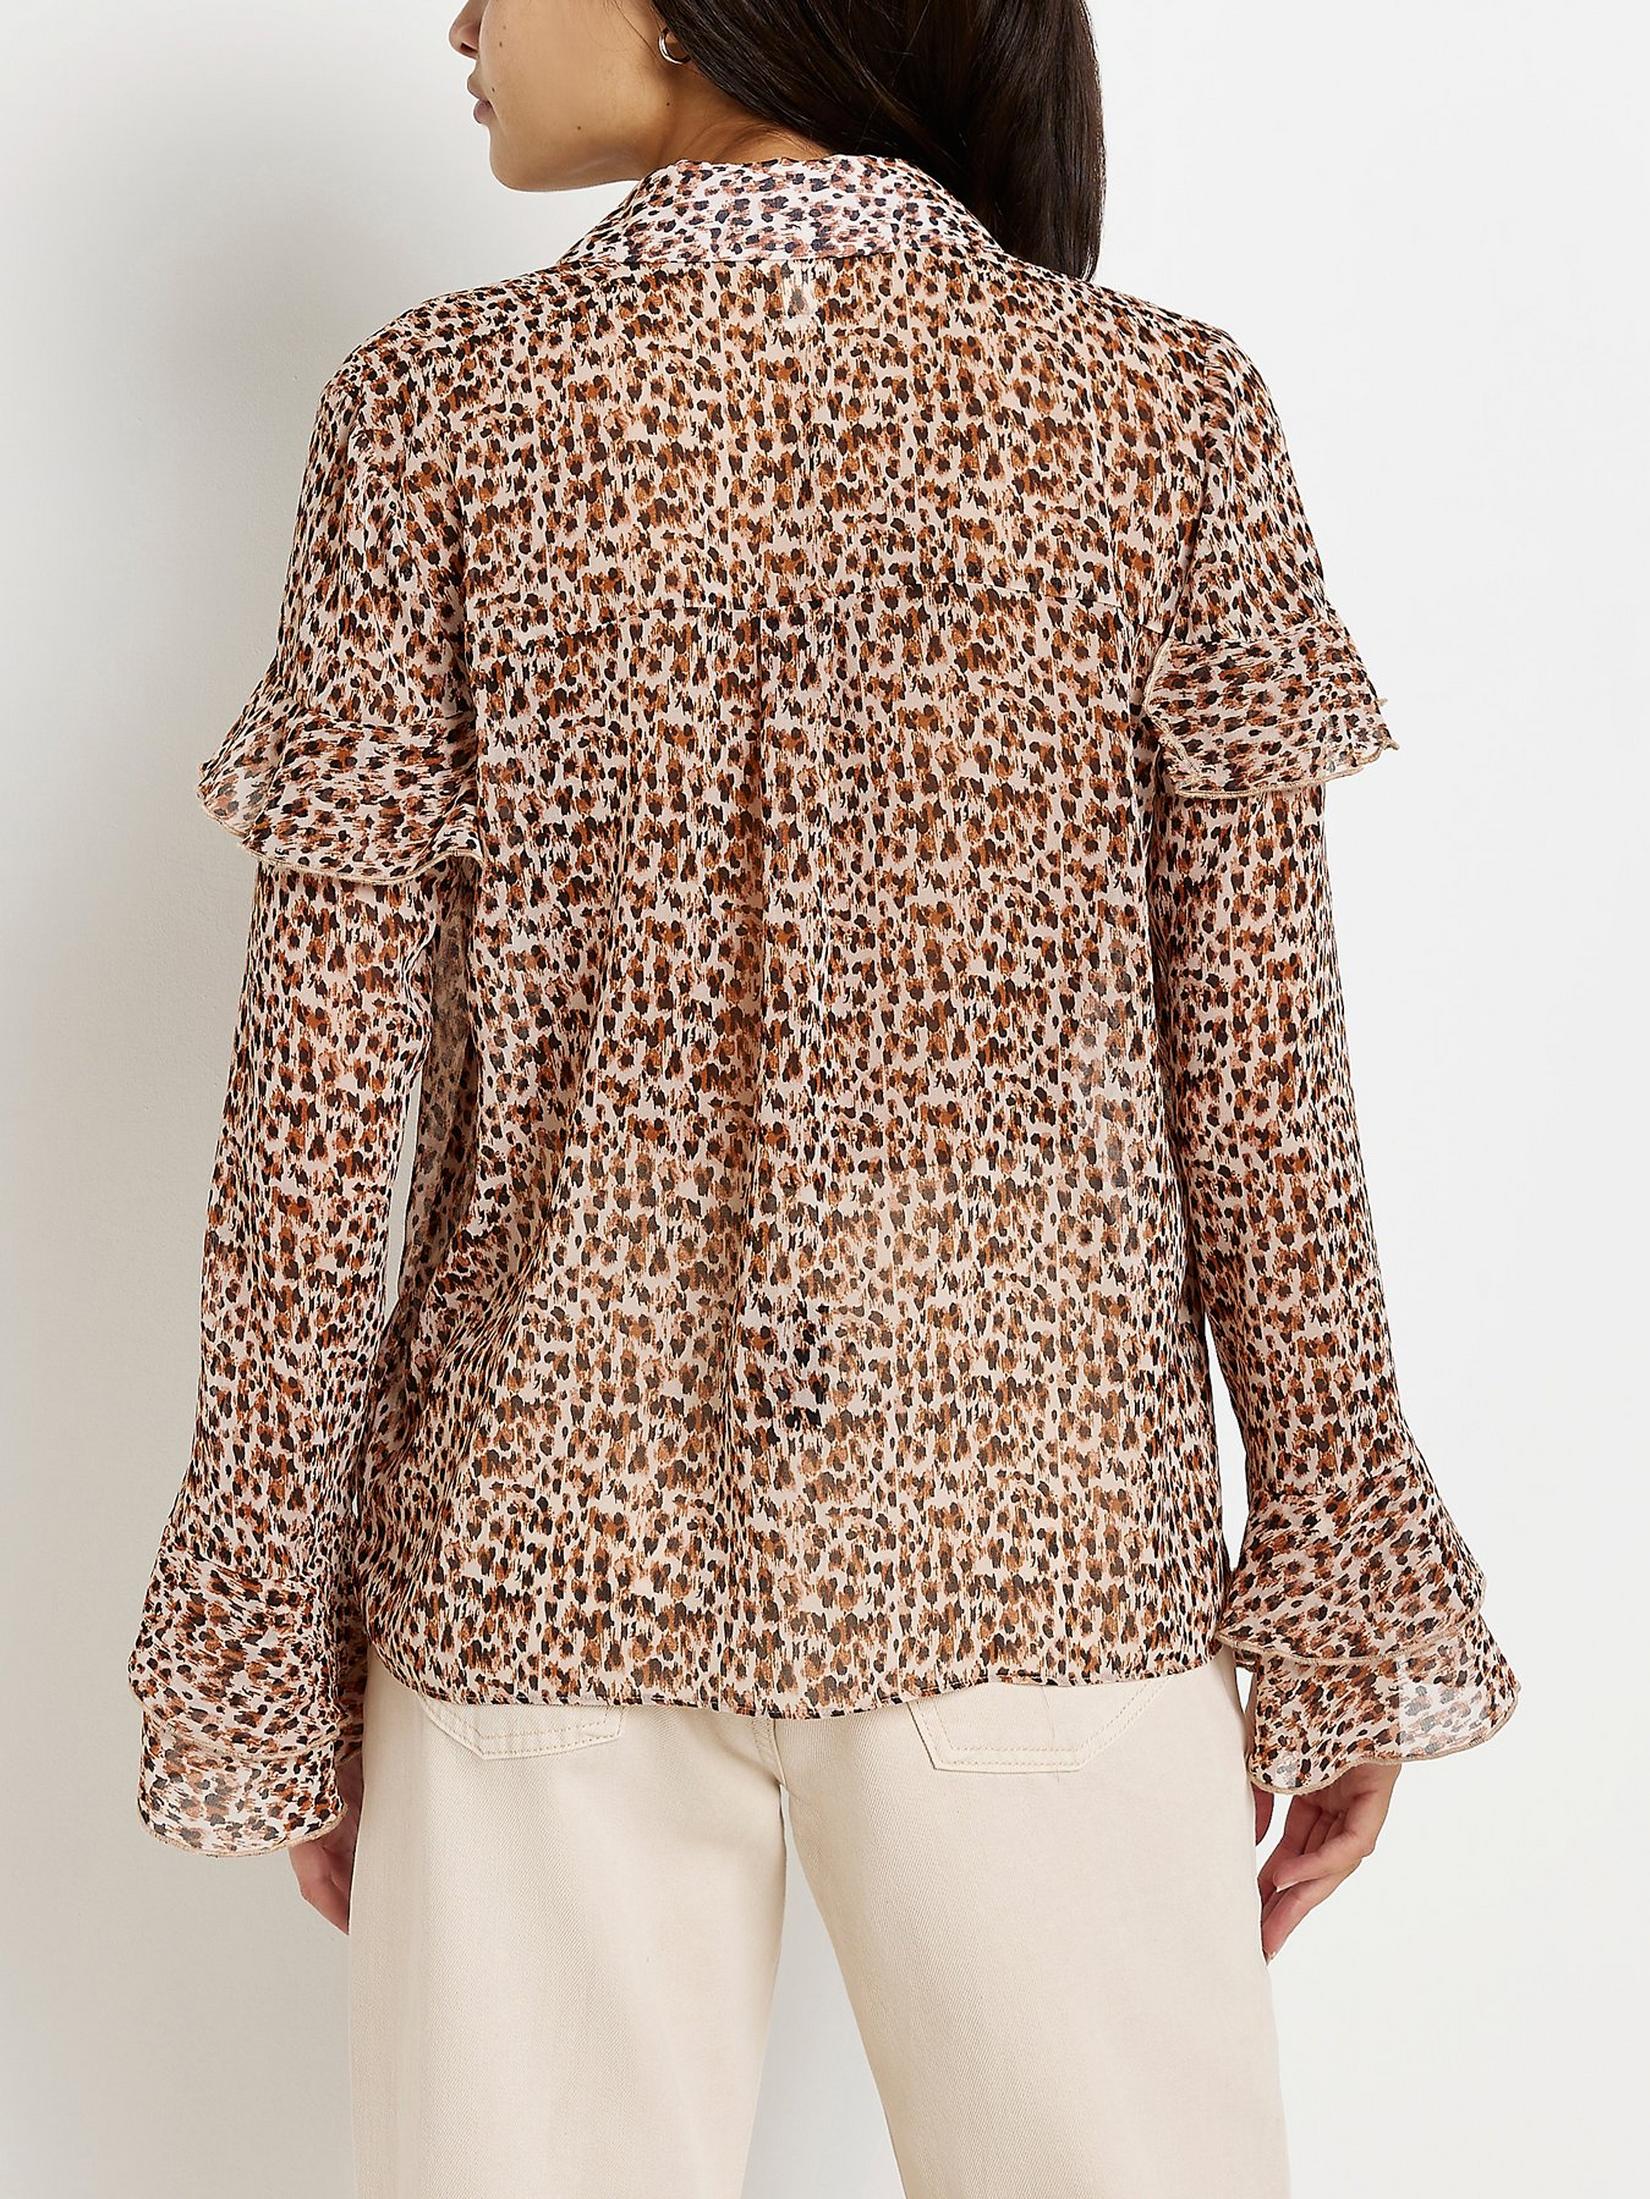 River Island Women's Leopard Print Shirt 765236 FE1054(SHR)